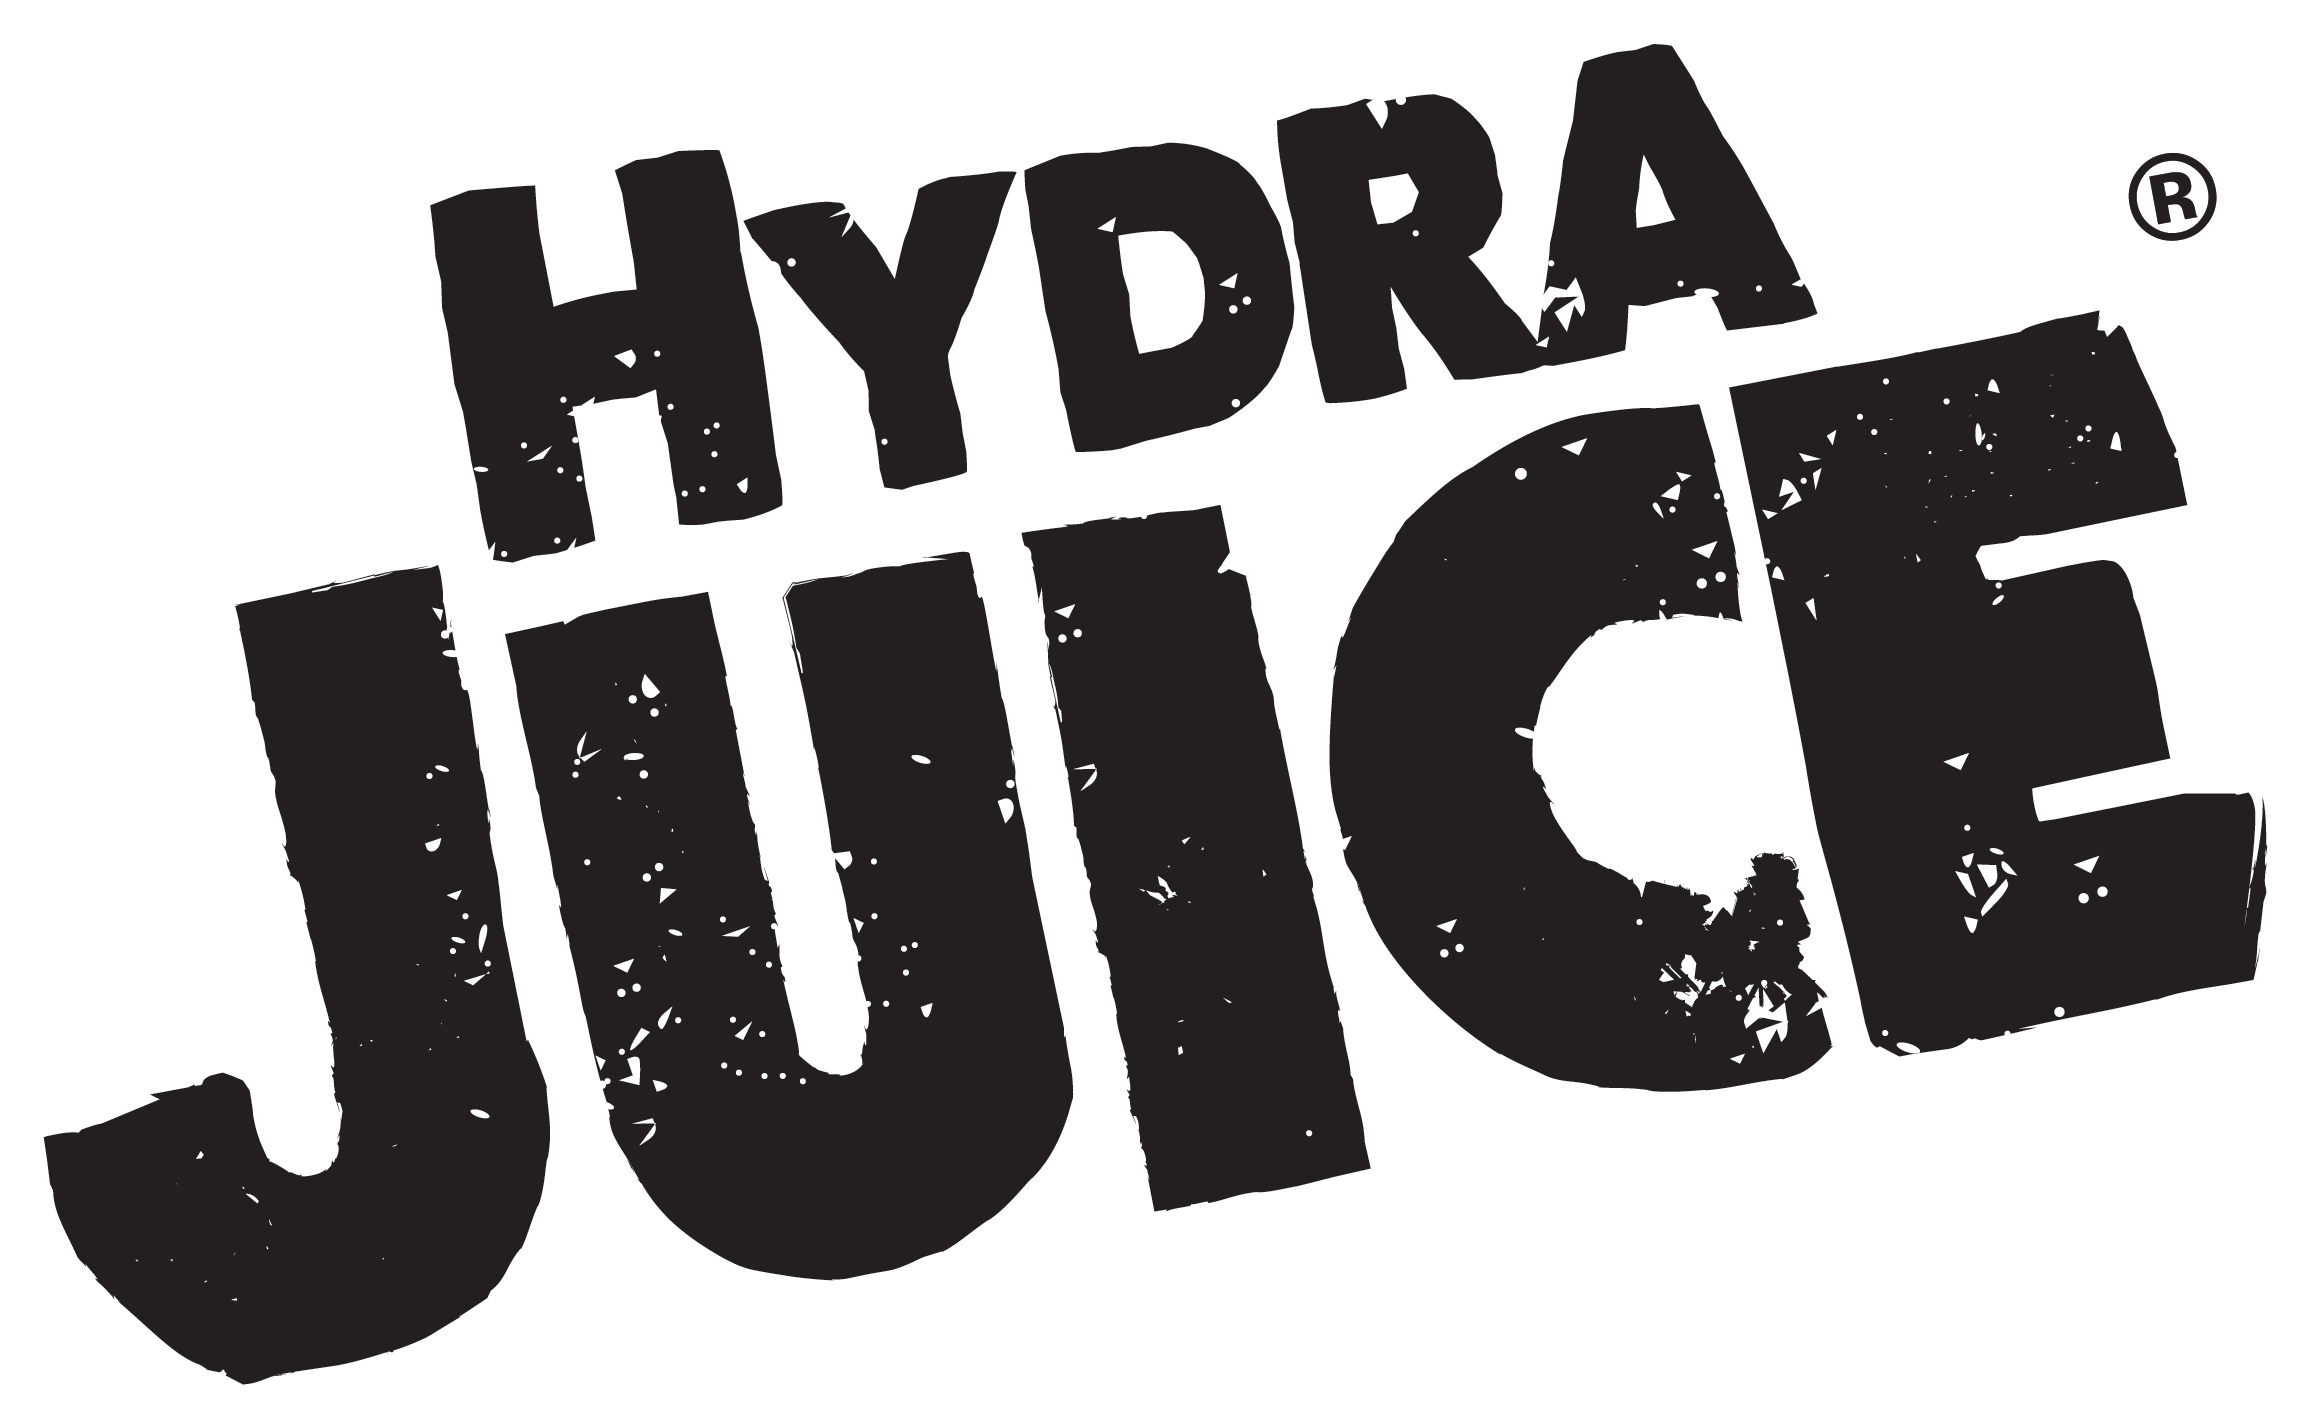 Hydra logo PNG Transparant Beeld